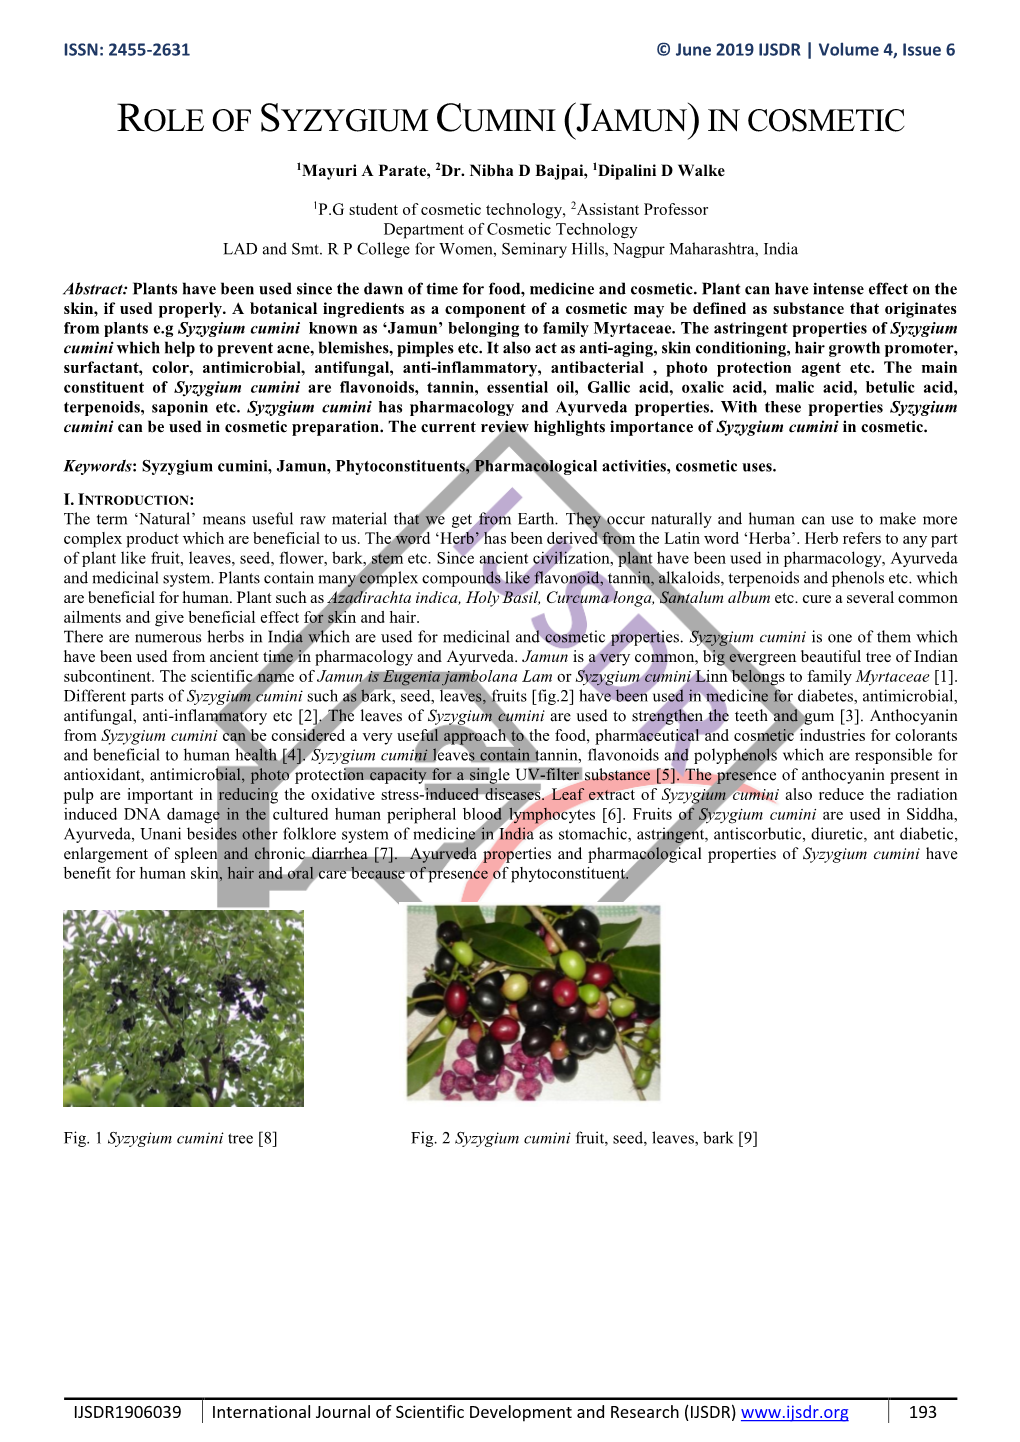 Role of Syzygium Cumini (Jamun)In Cosmetic